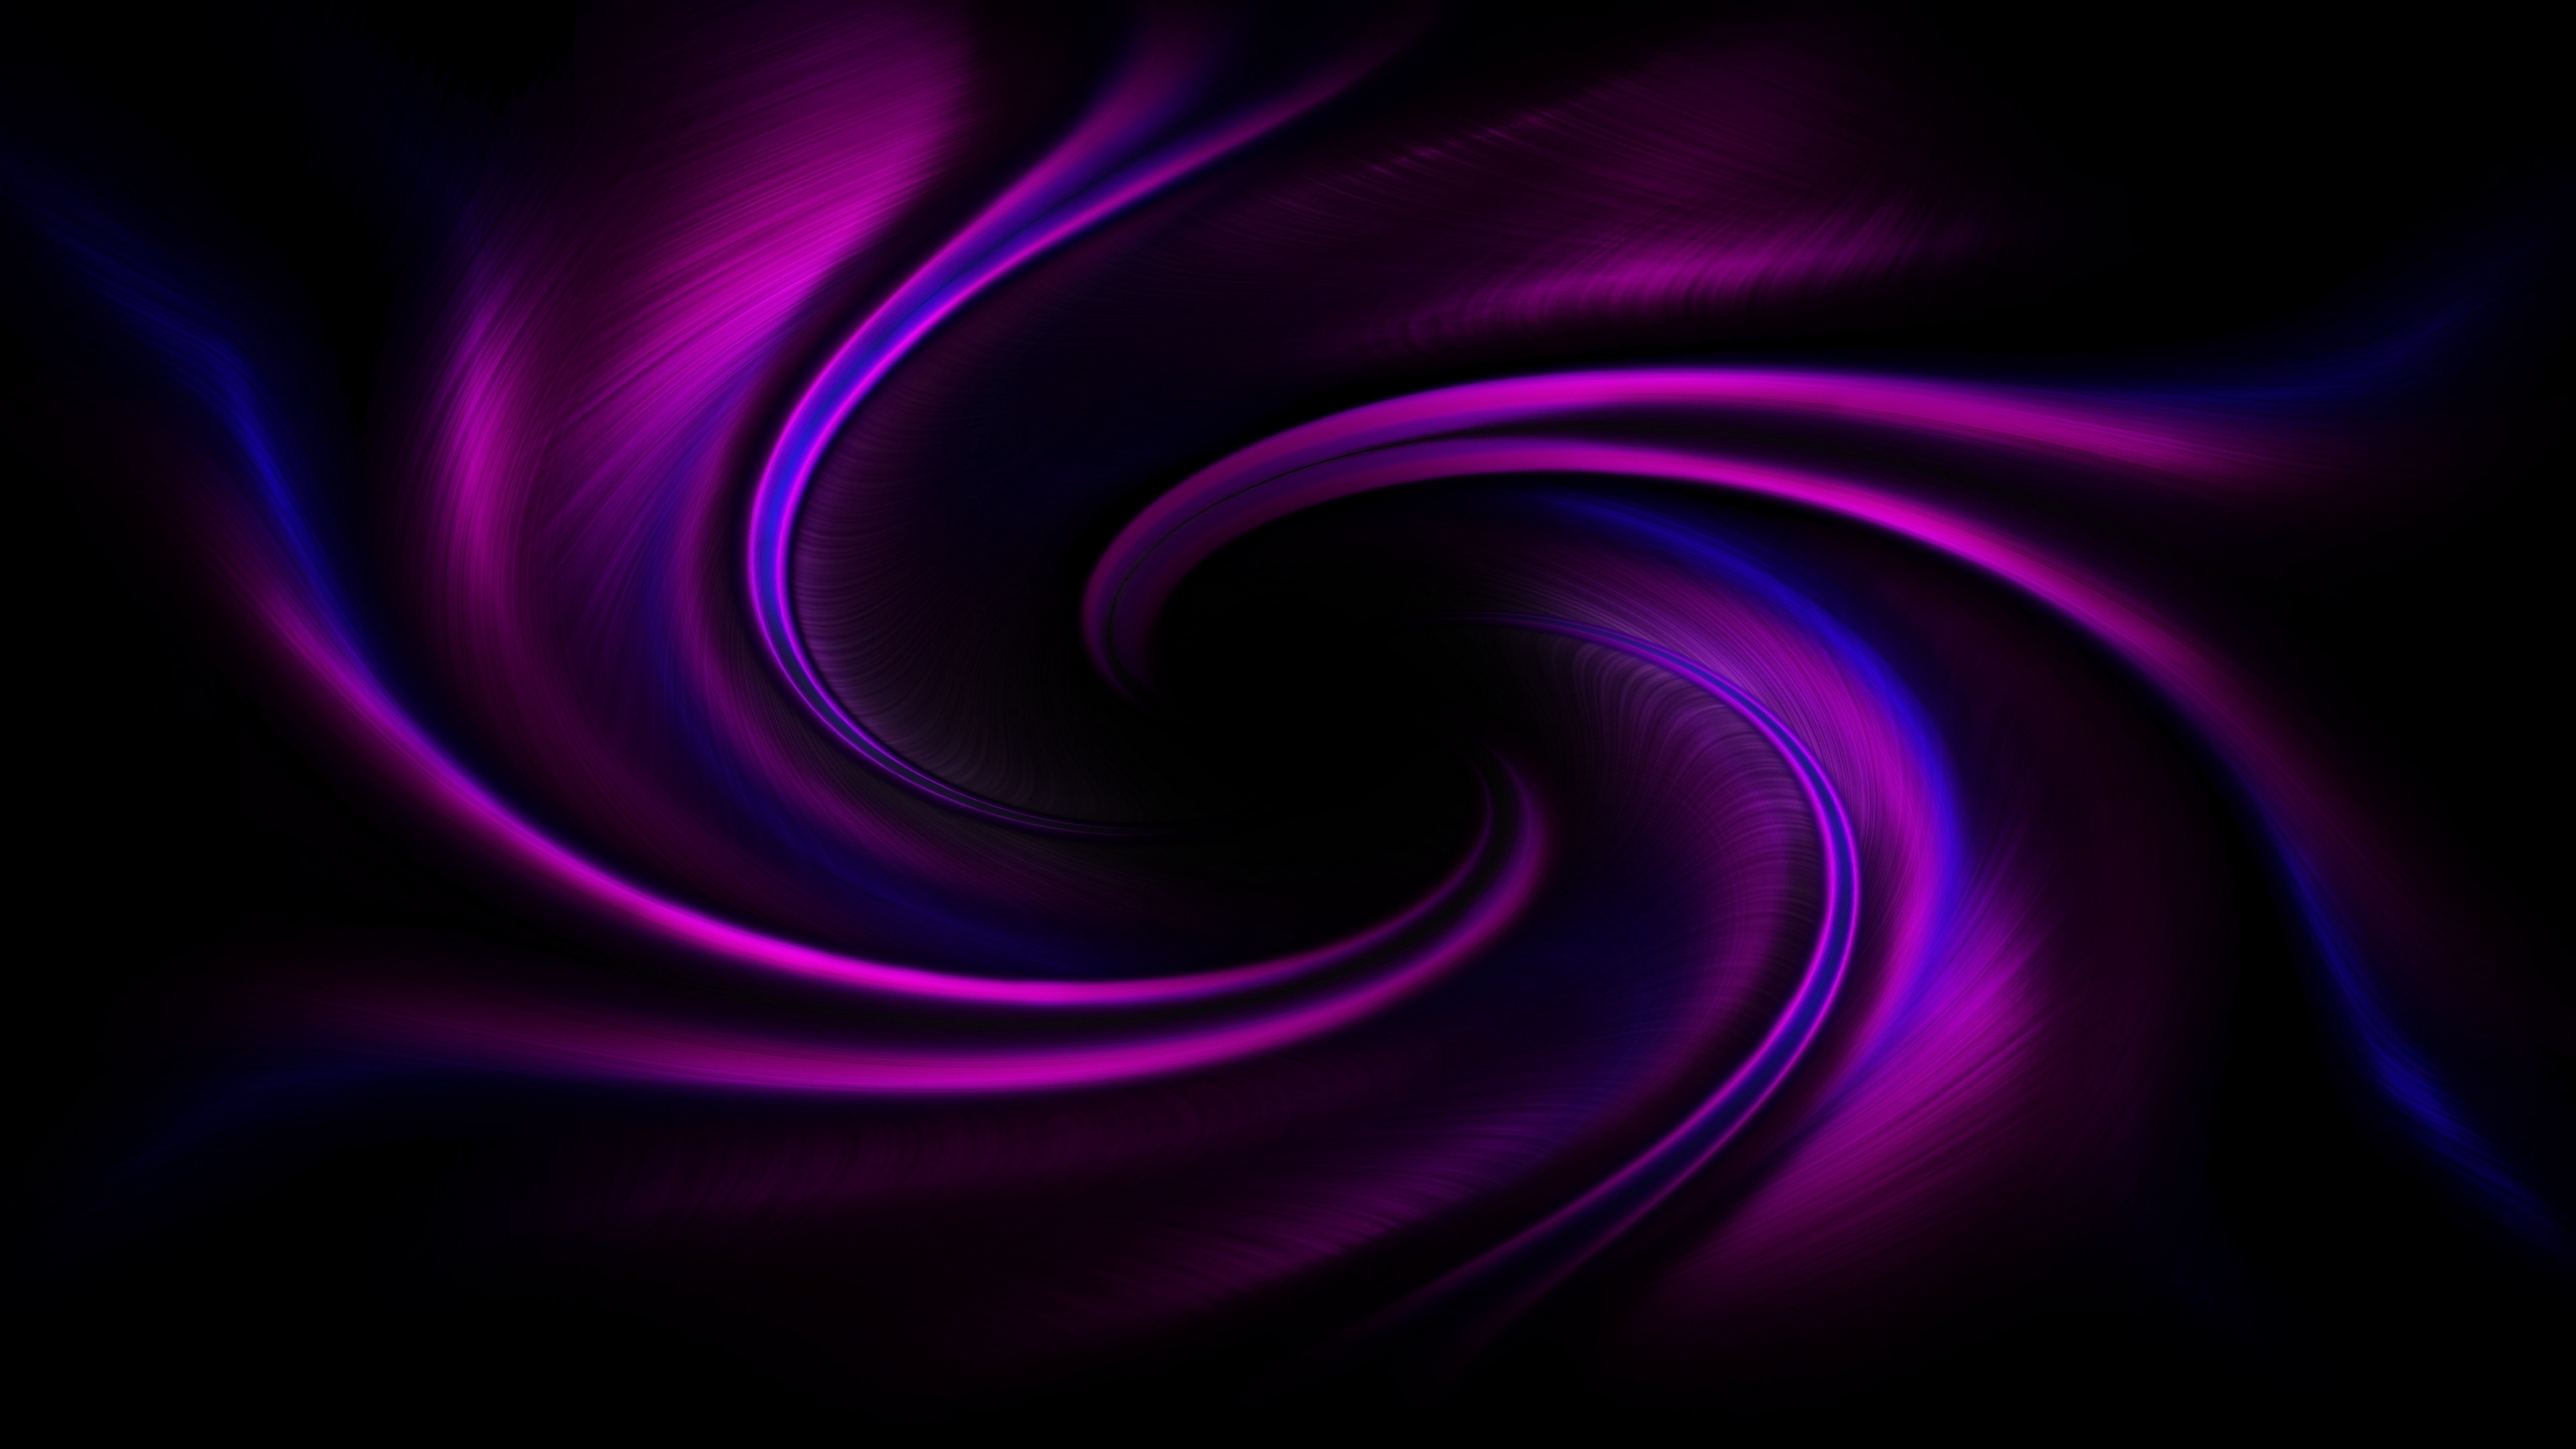 relievo rotating purple swirl merger 4k 1539369605 - relievo, rotating, purple, swirl, merger 4k - rotating, relievo, Purple